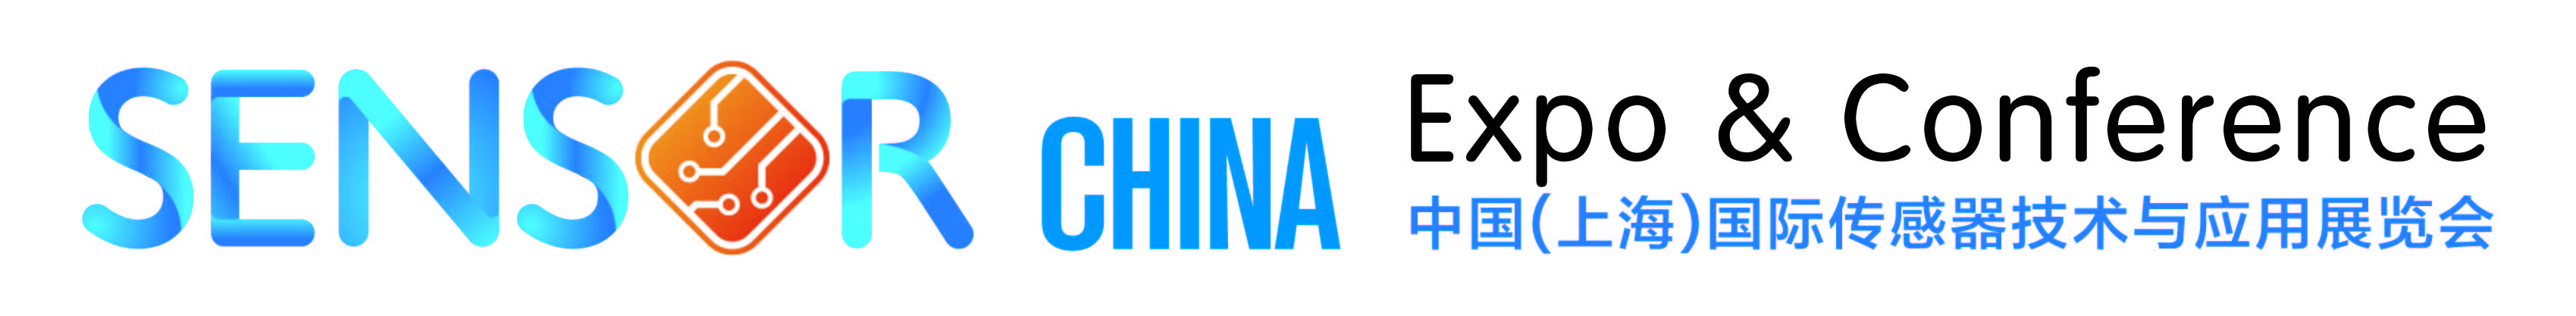 SENSOR CHINA logo-01.jpg